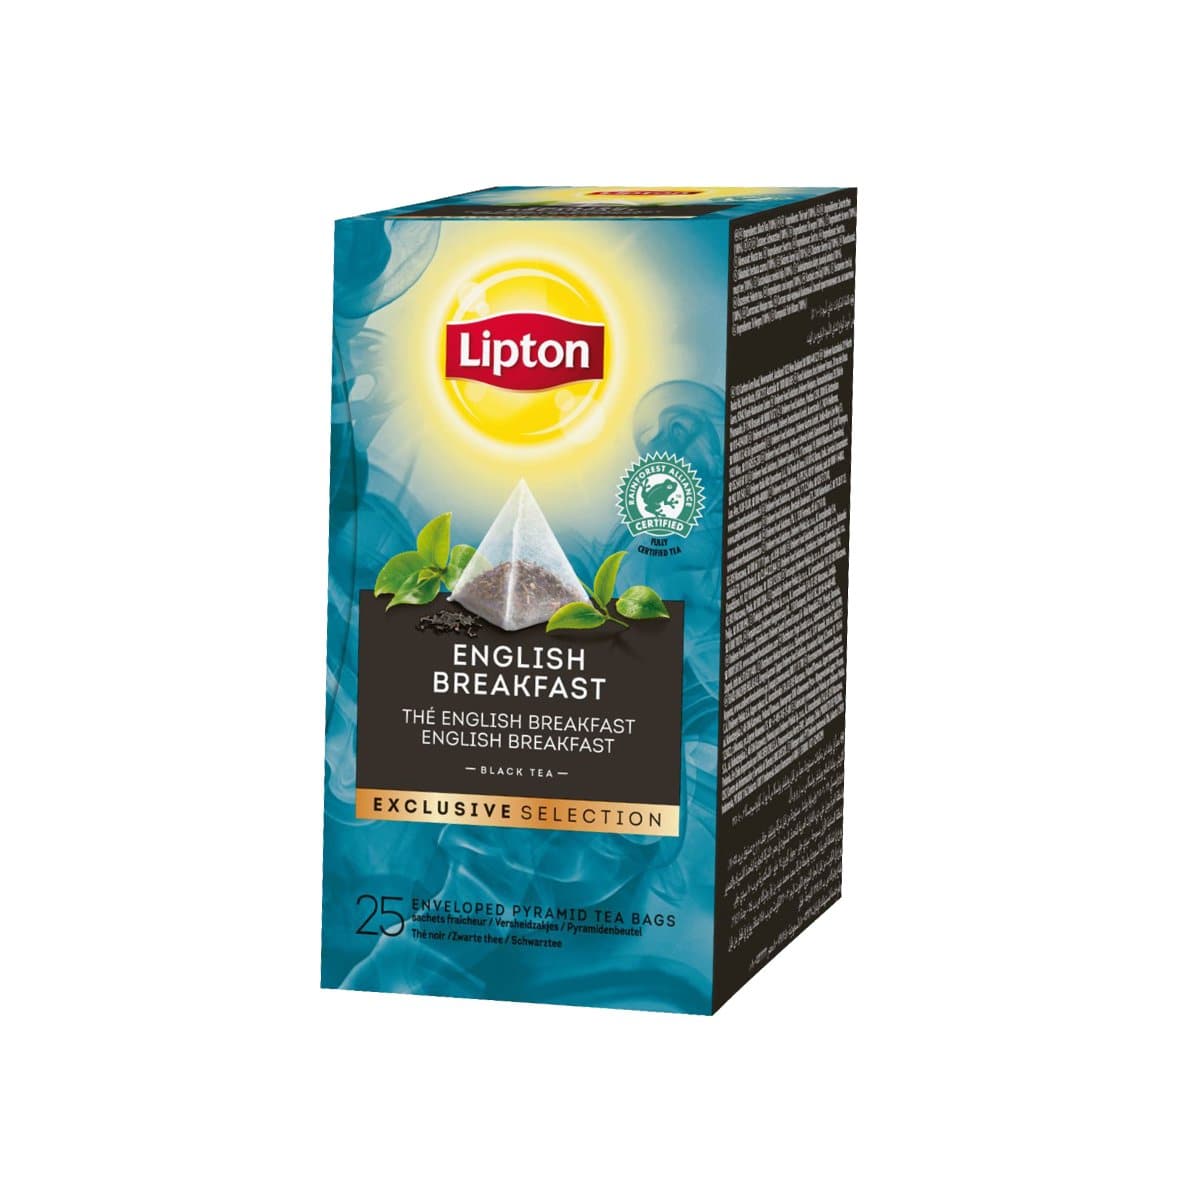 320+ Triangle Tea Bag Stock Photos, Pictures & Royalty-Free Images - iStock  | Pyramid tea bag